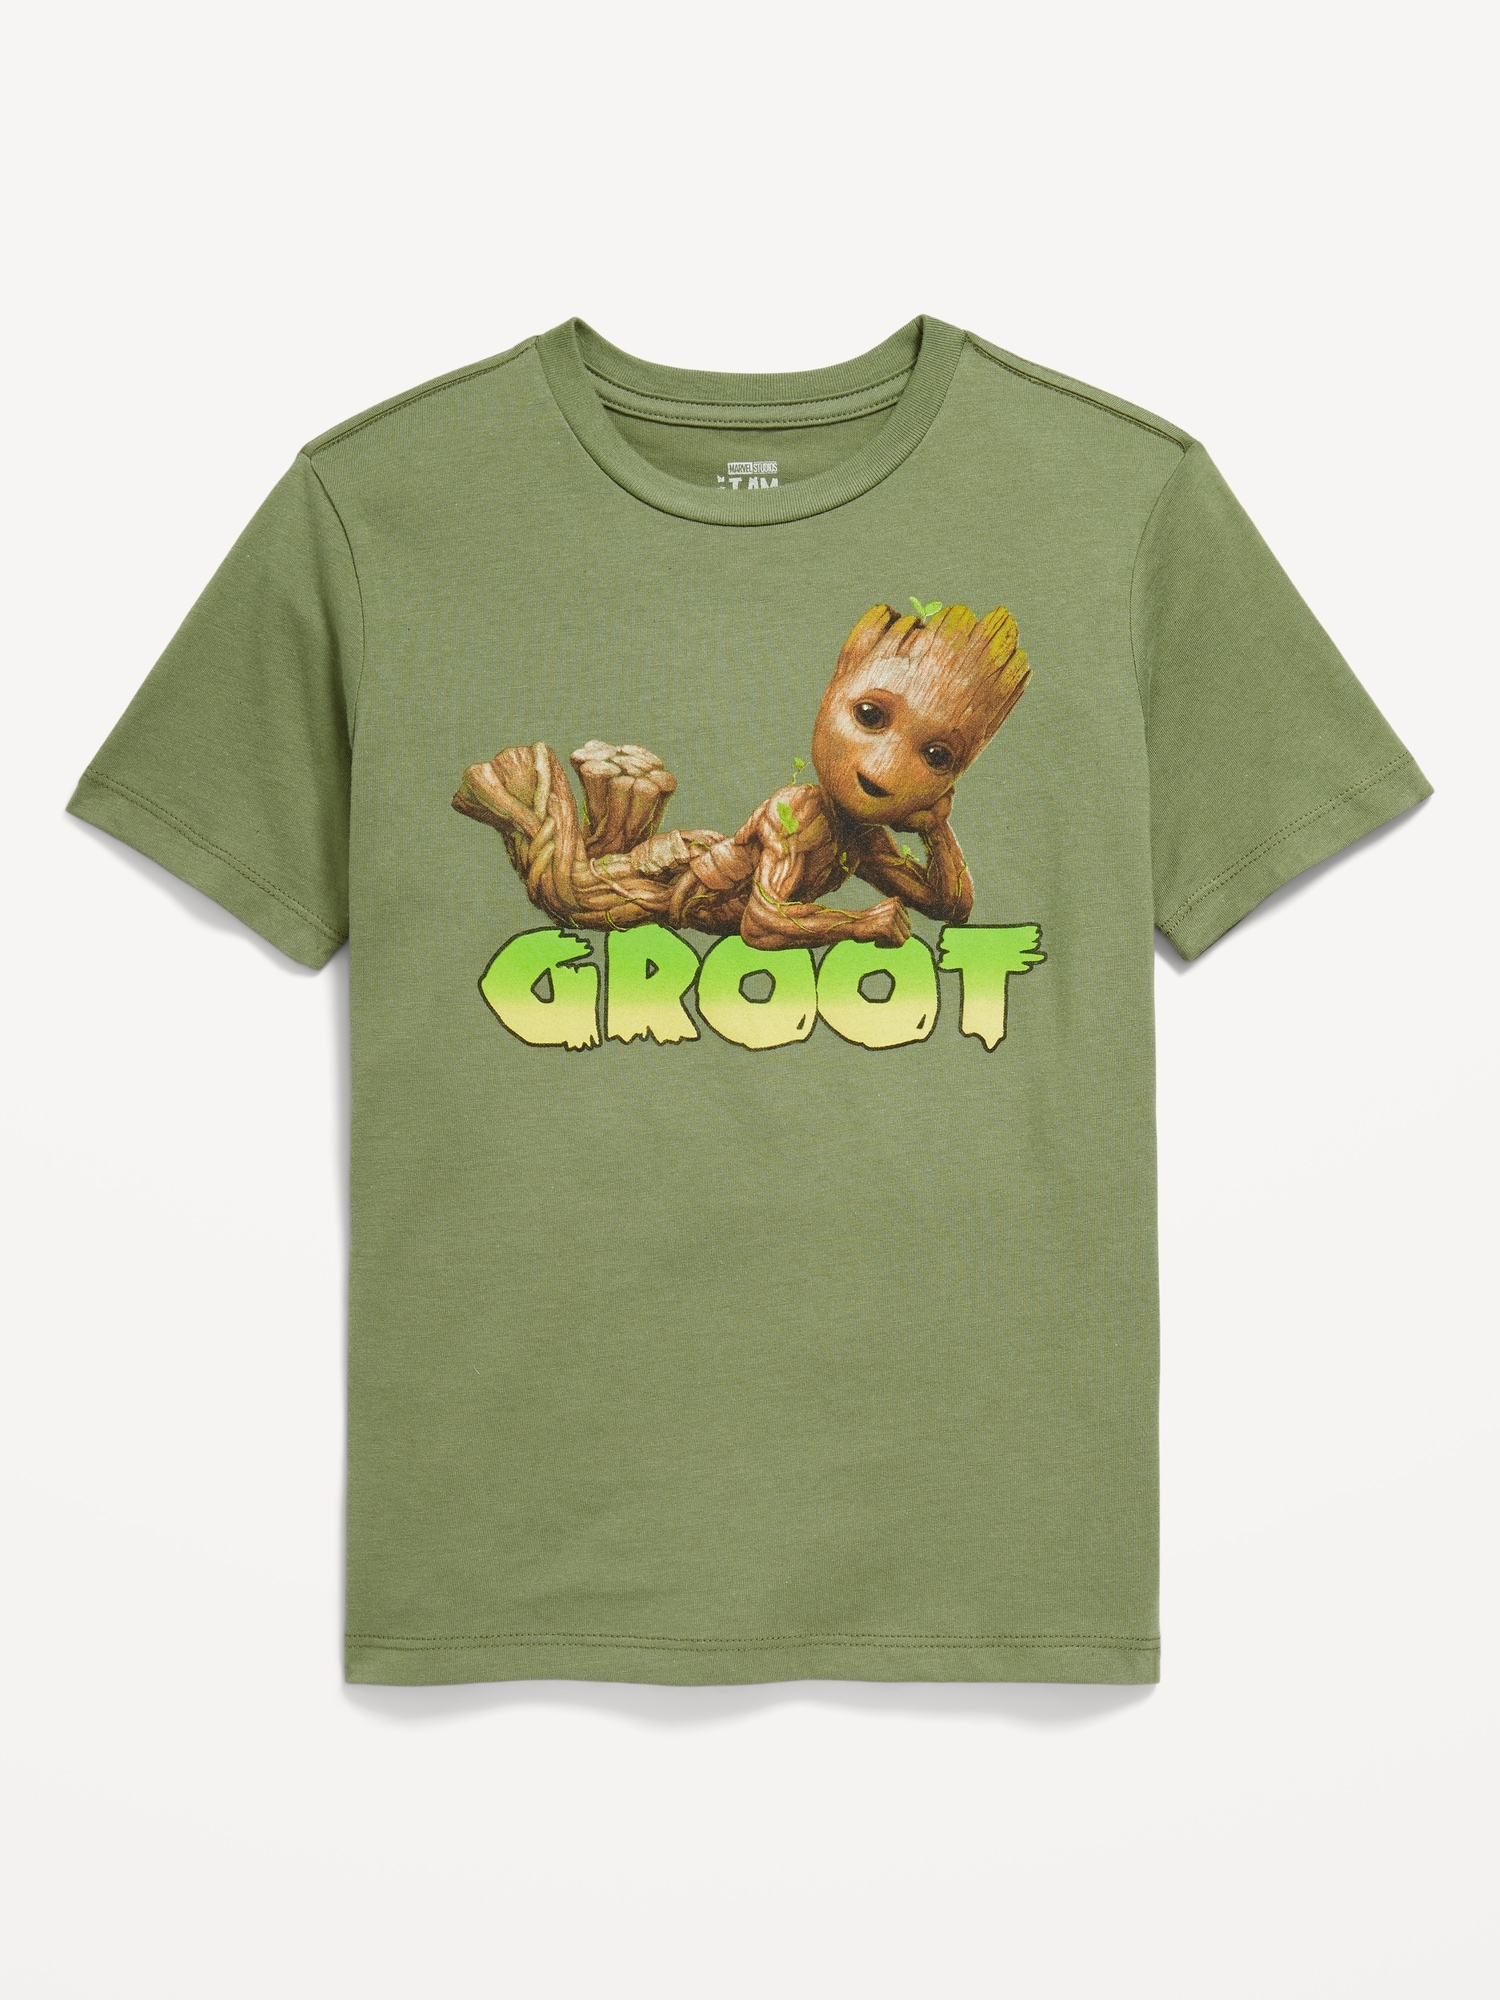 Marvel™ Groot Gender-Neutral Graphic T-Shirt for Kids